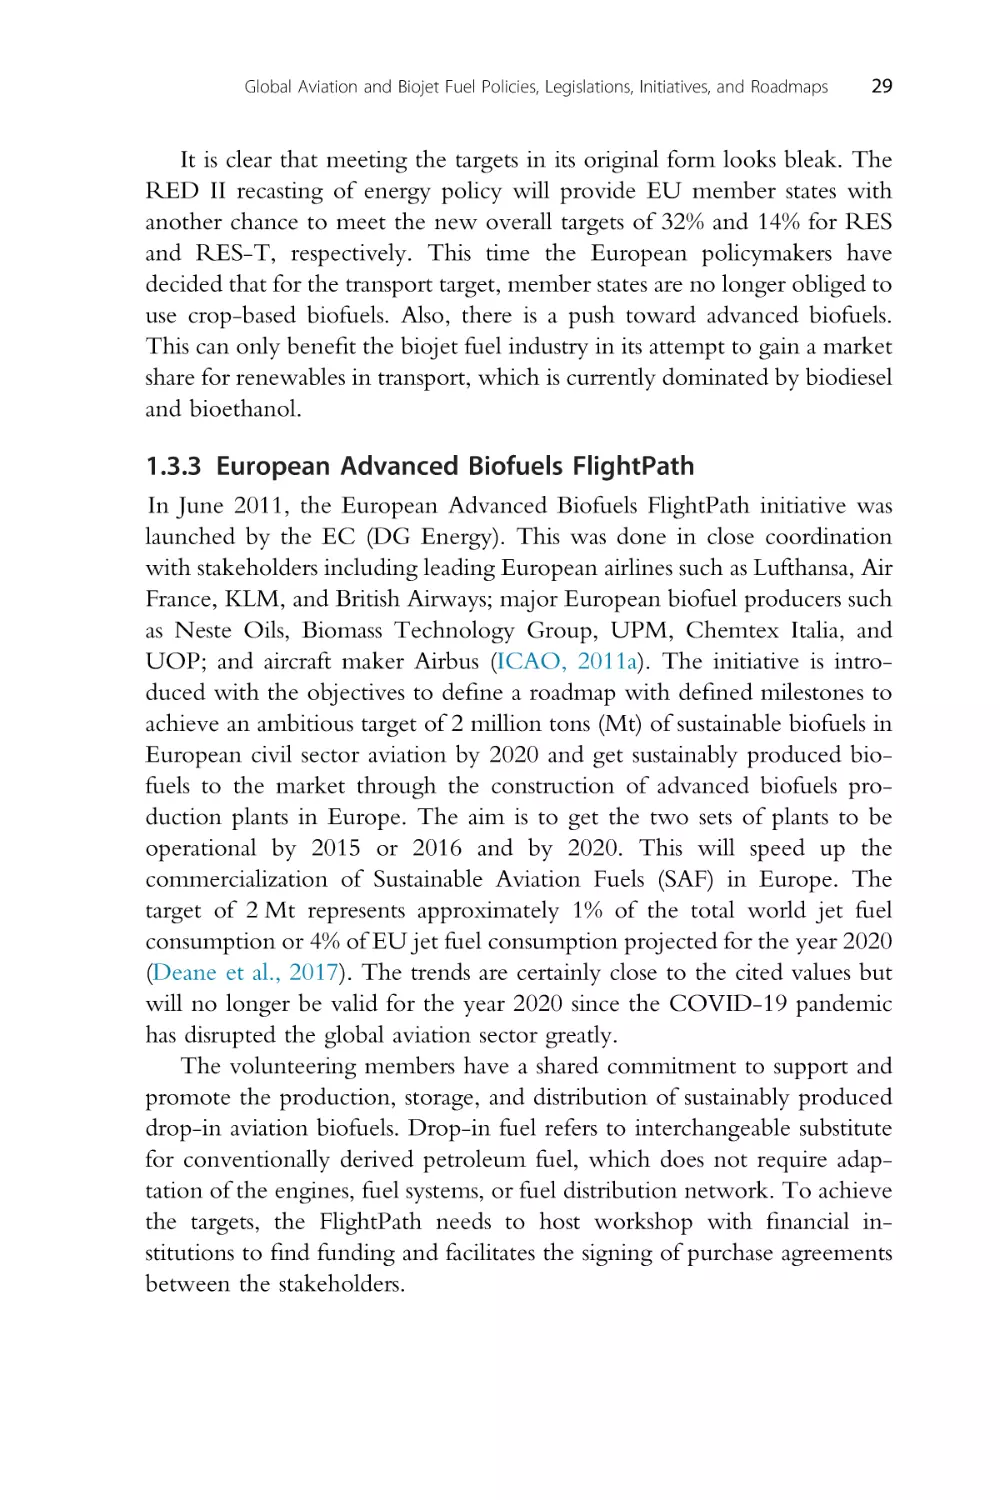 1.3.3 European Advanced Biofuels FlightPath